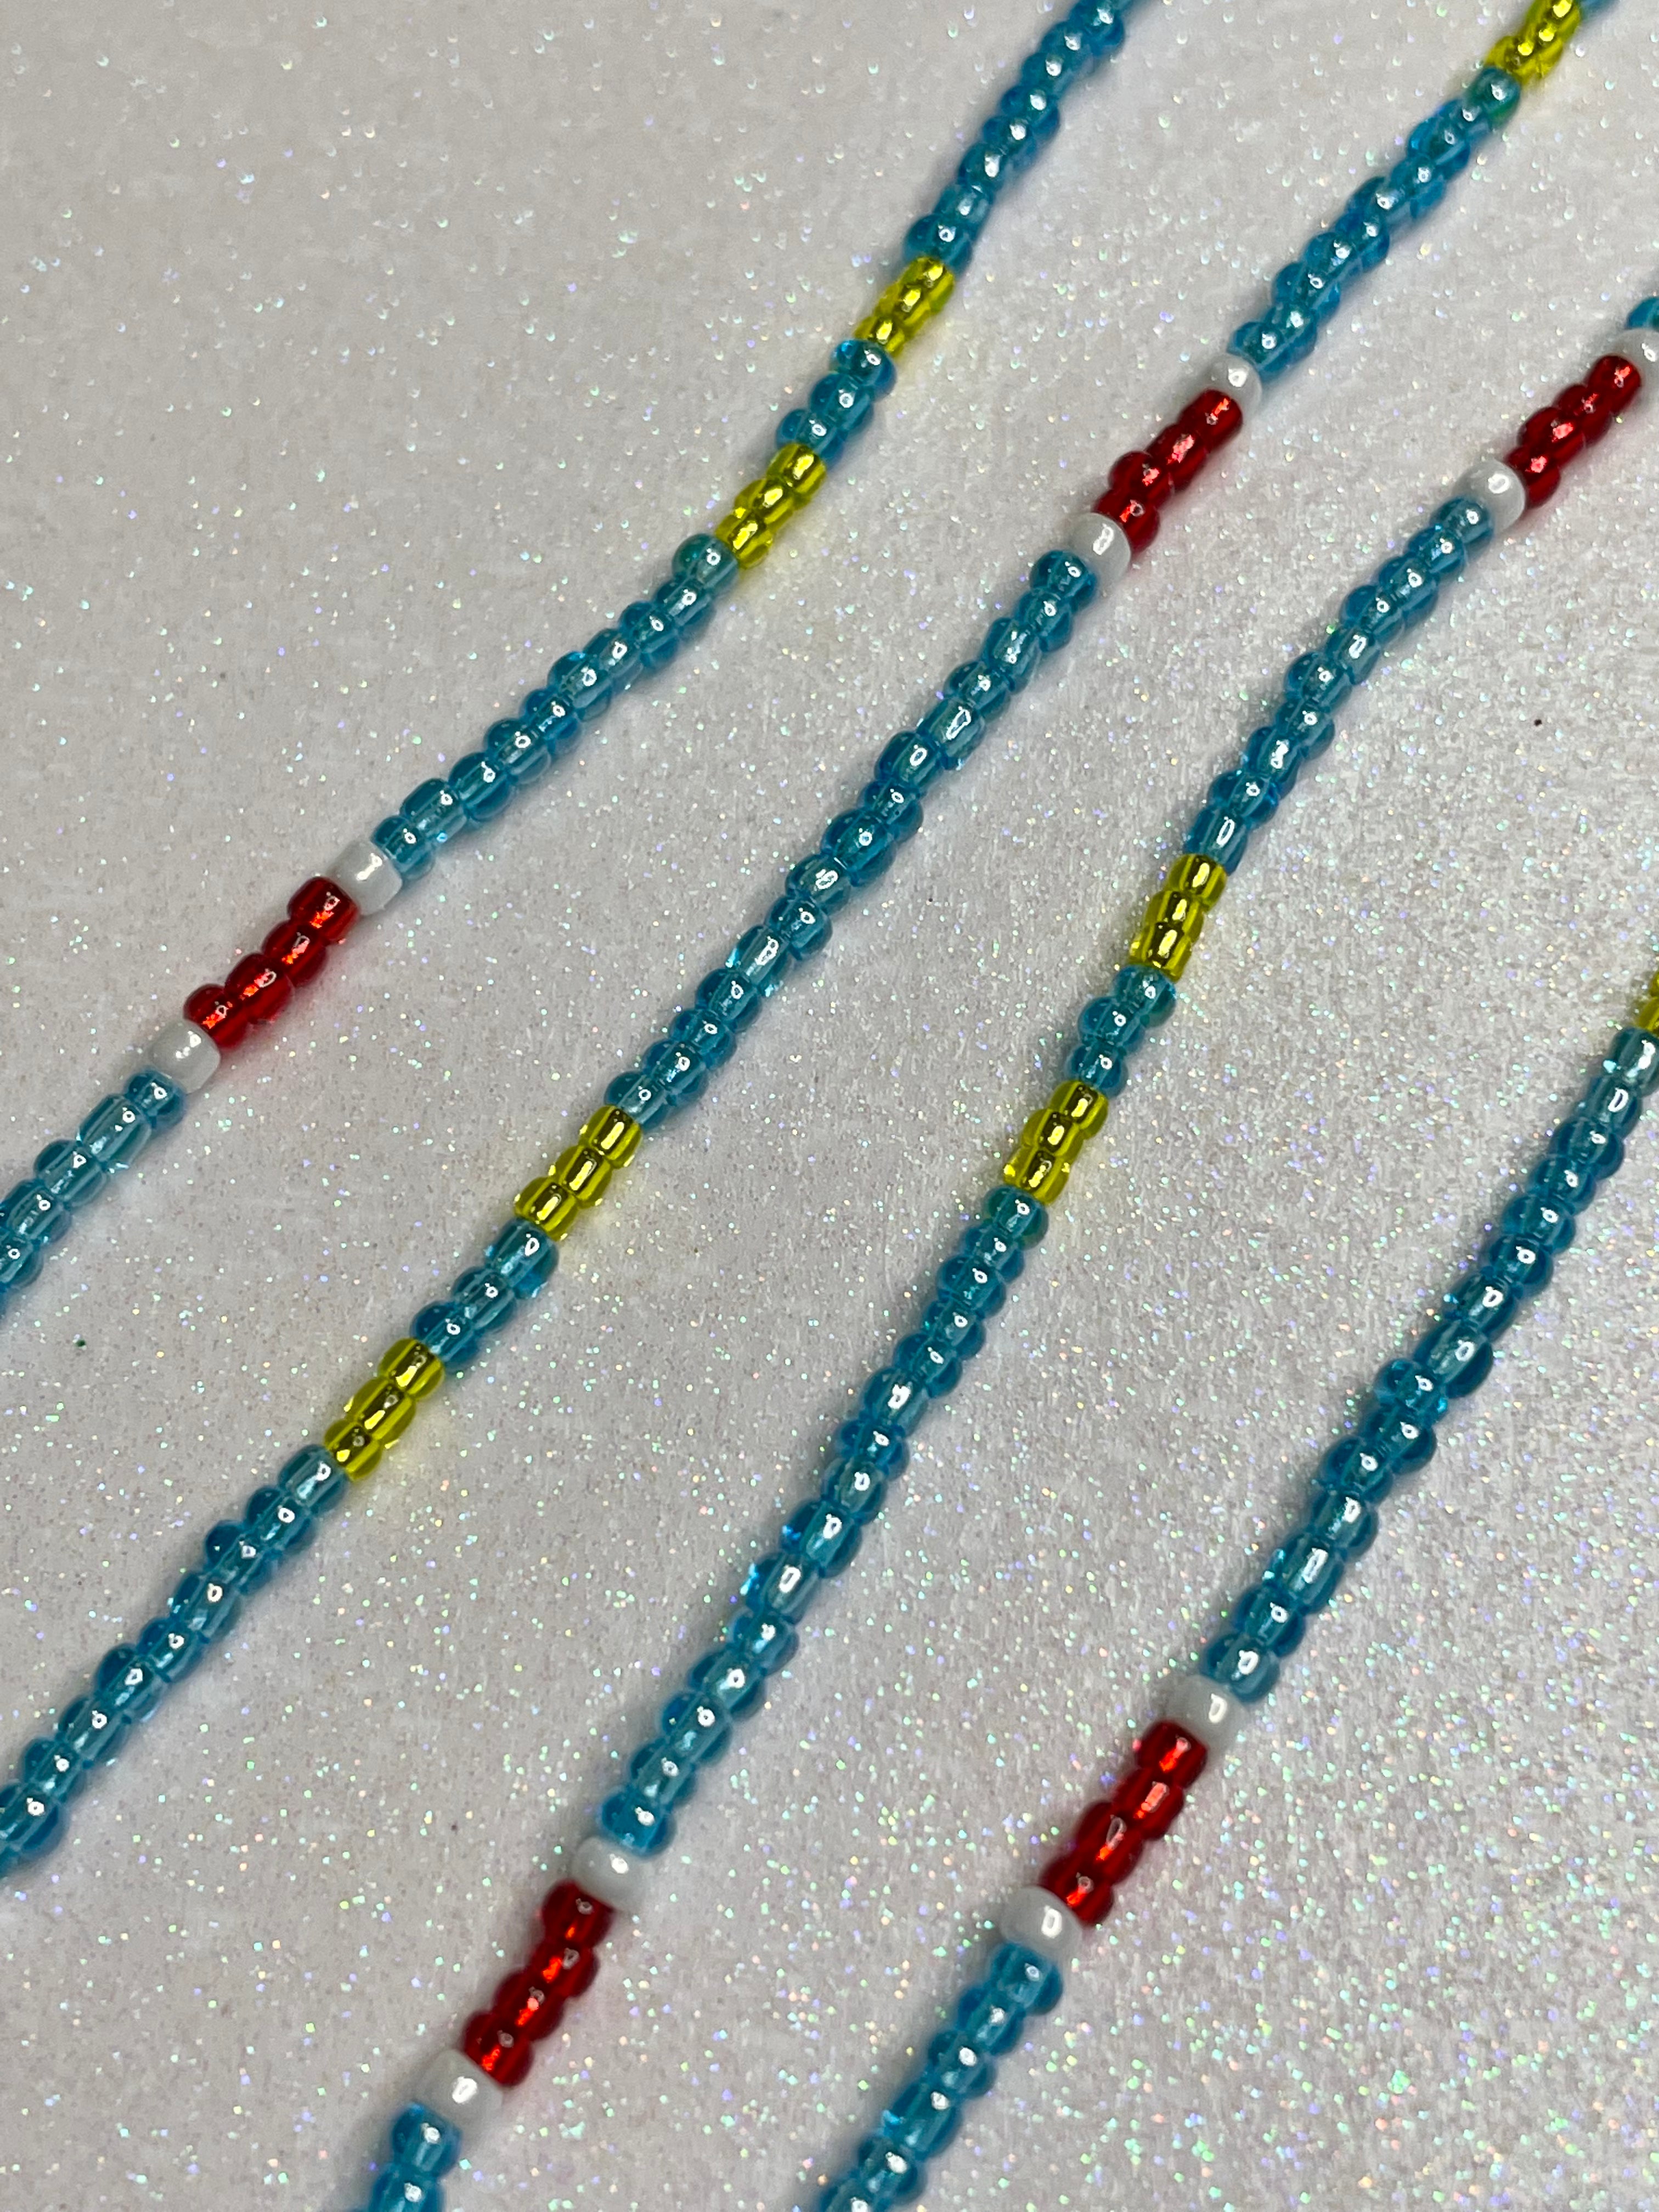 Aruba 🇦🇼 Waist Beads